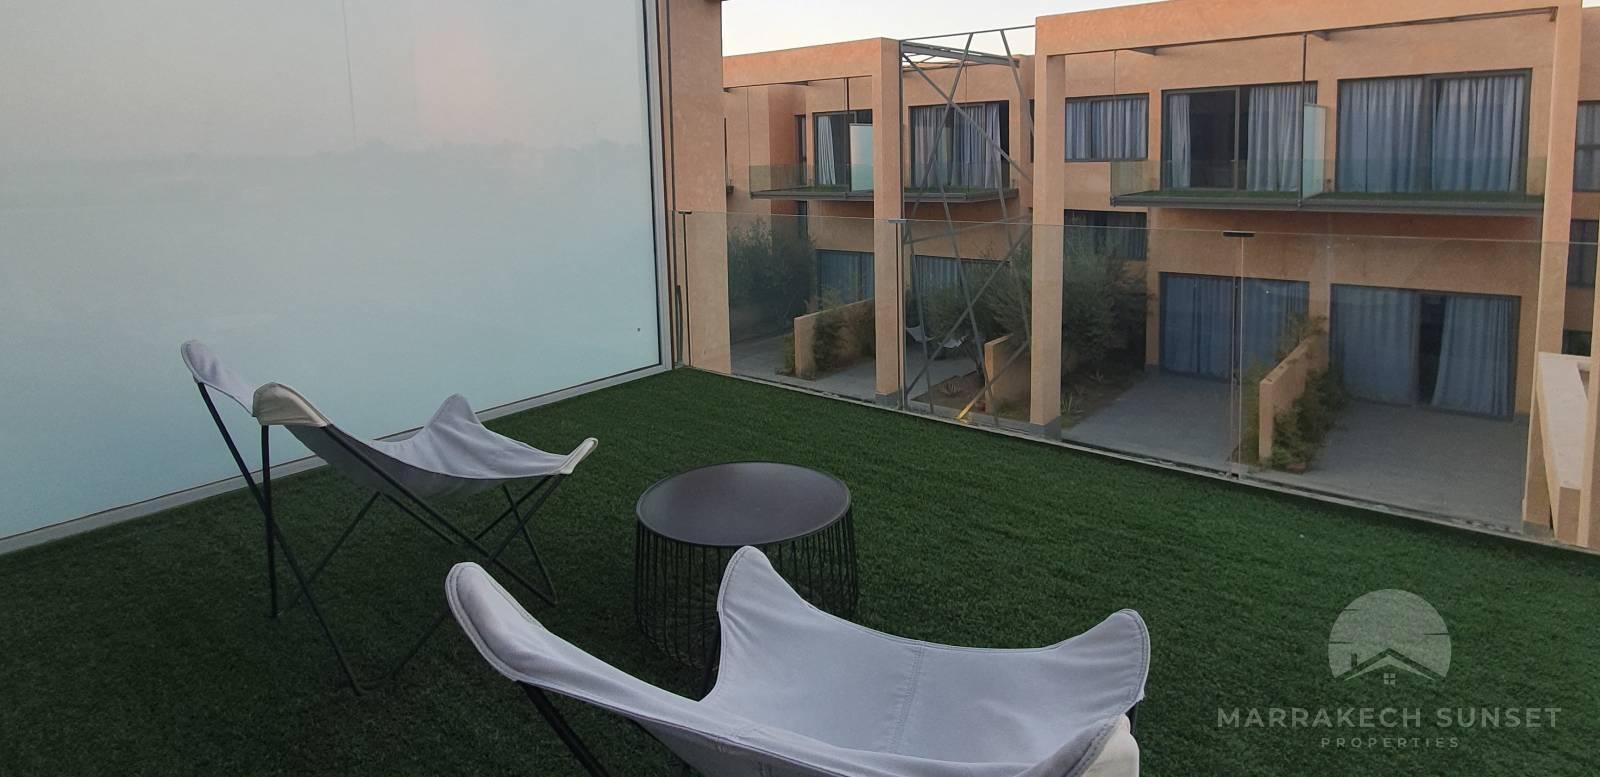 Luxury 2 bedroom apartment for sale in Marrakech  